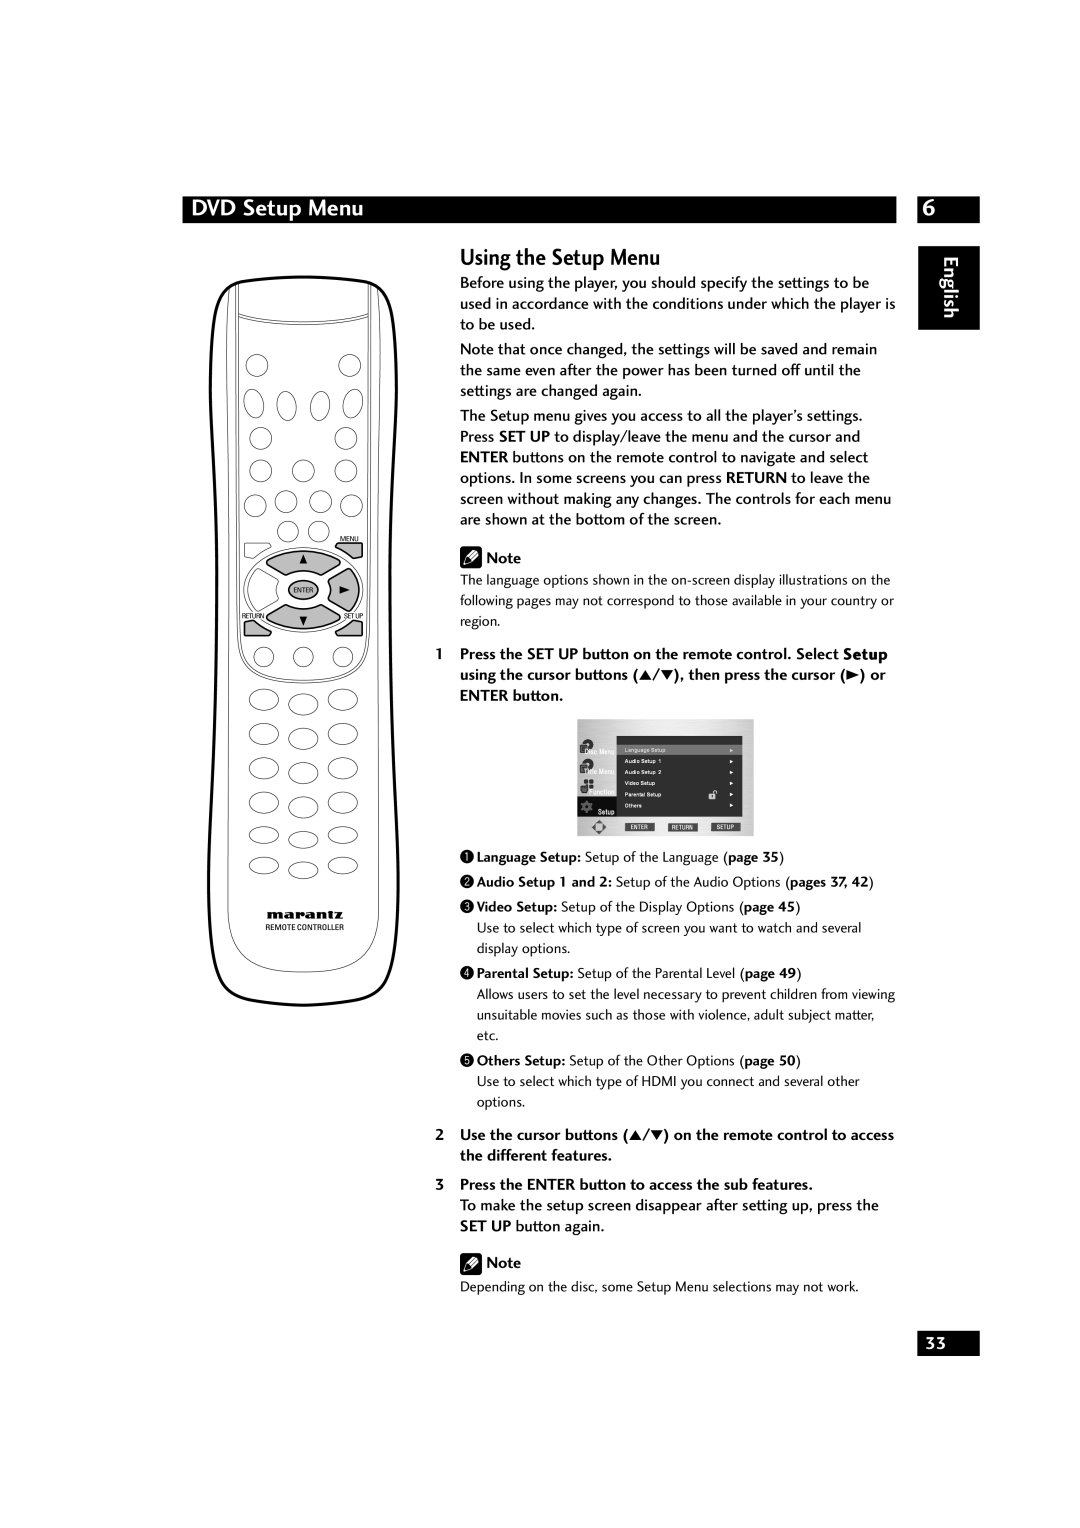 Marantz DV9600 manual Using the Setup Menu, Press the ENTER button to access the sub features, DVD Setup Menu, English 